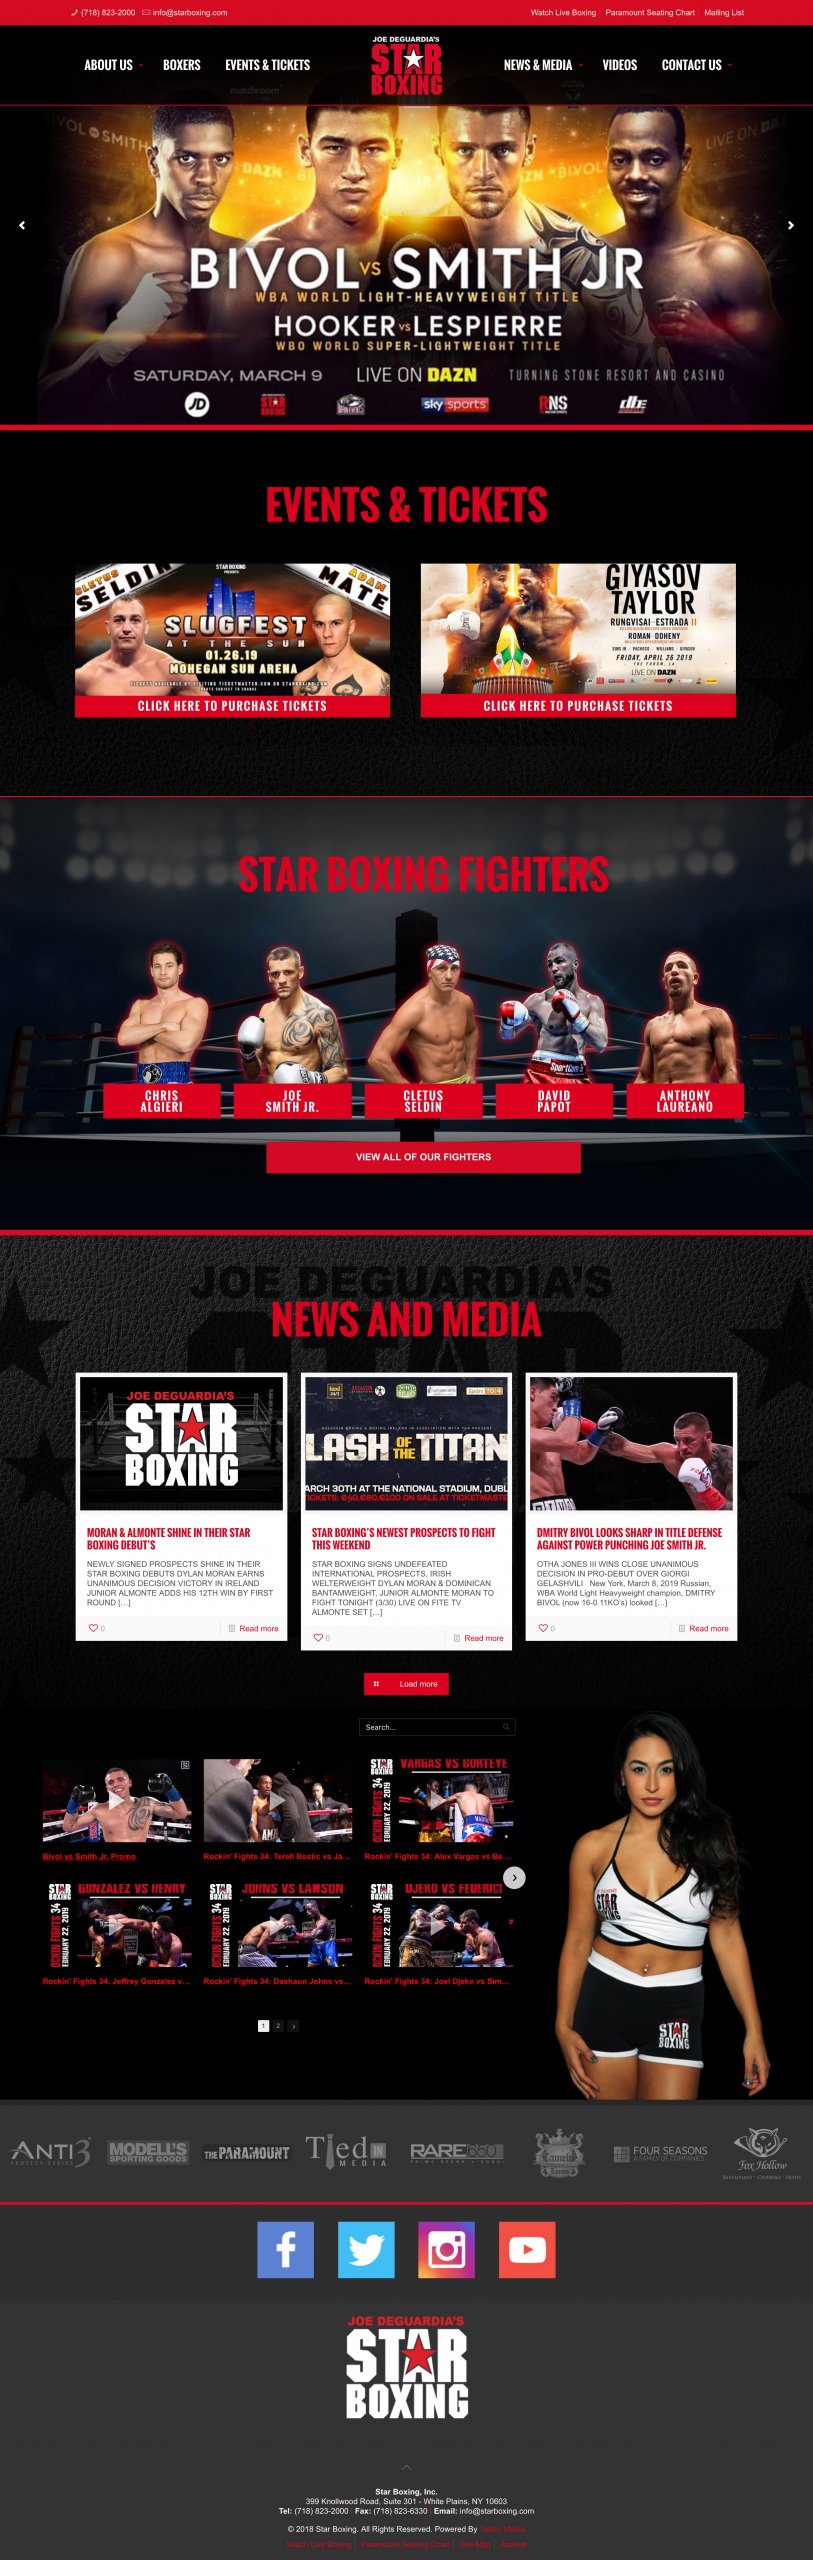 Star Boxing Website design homepage